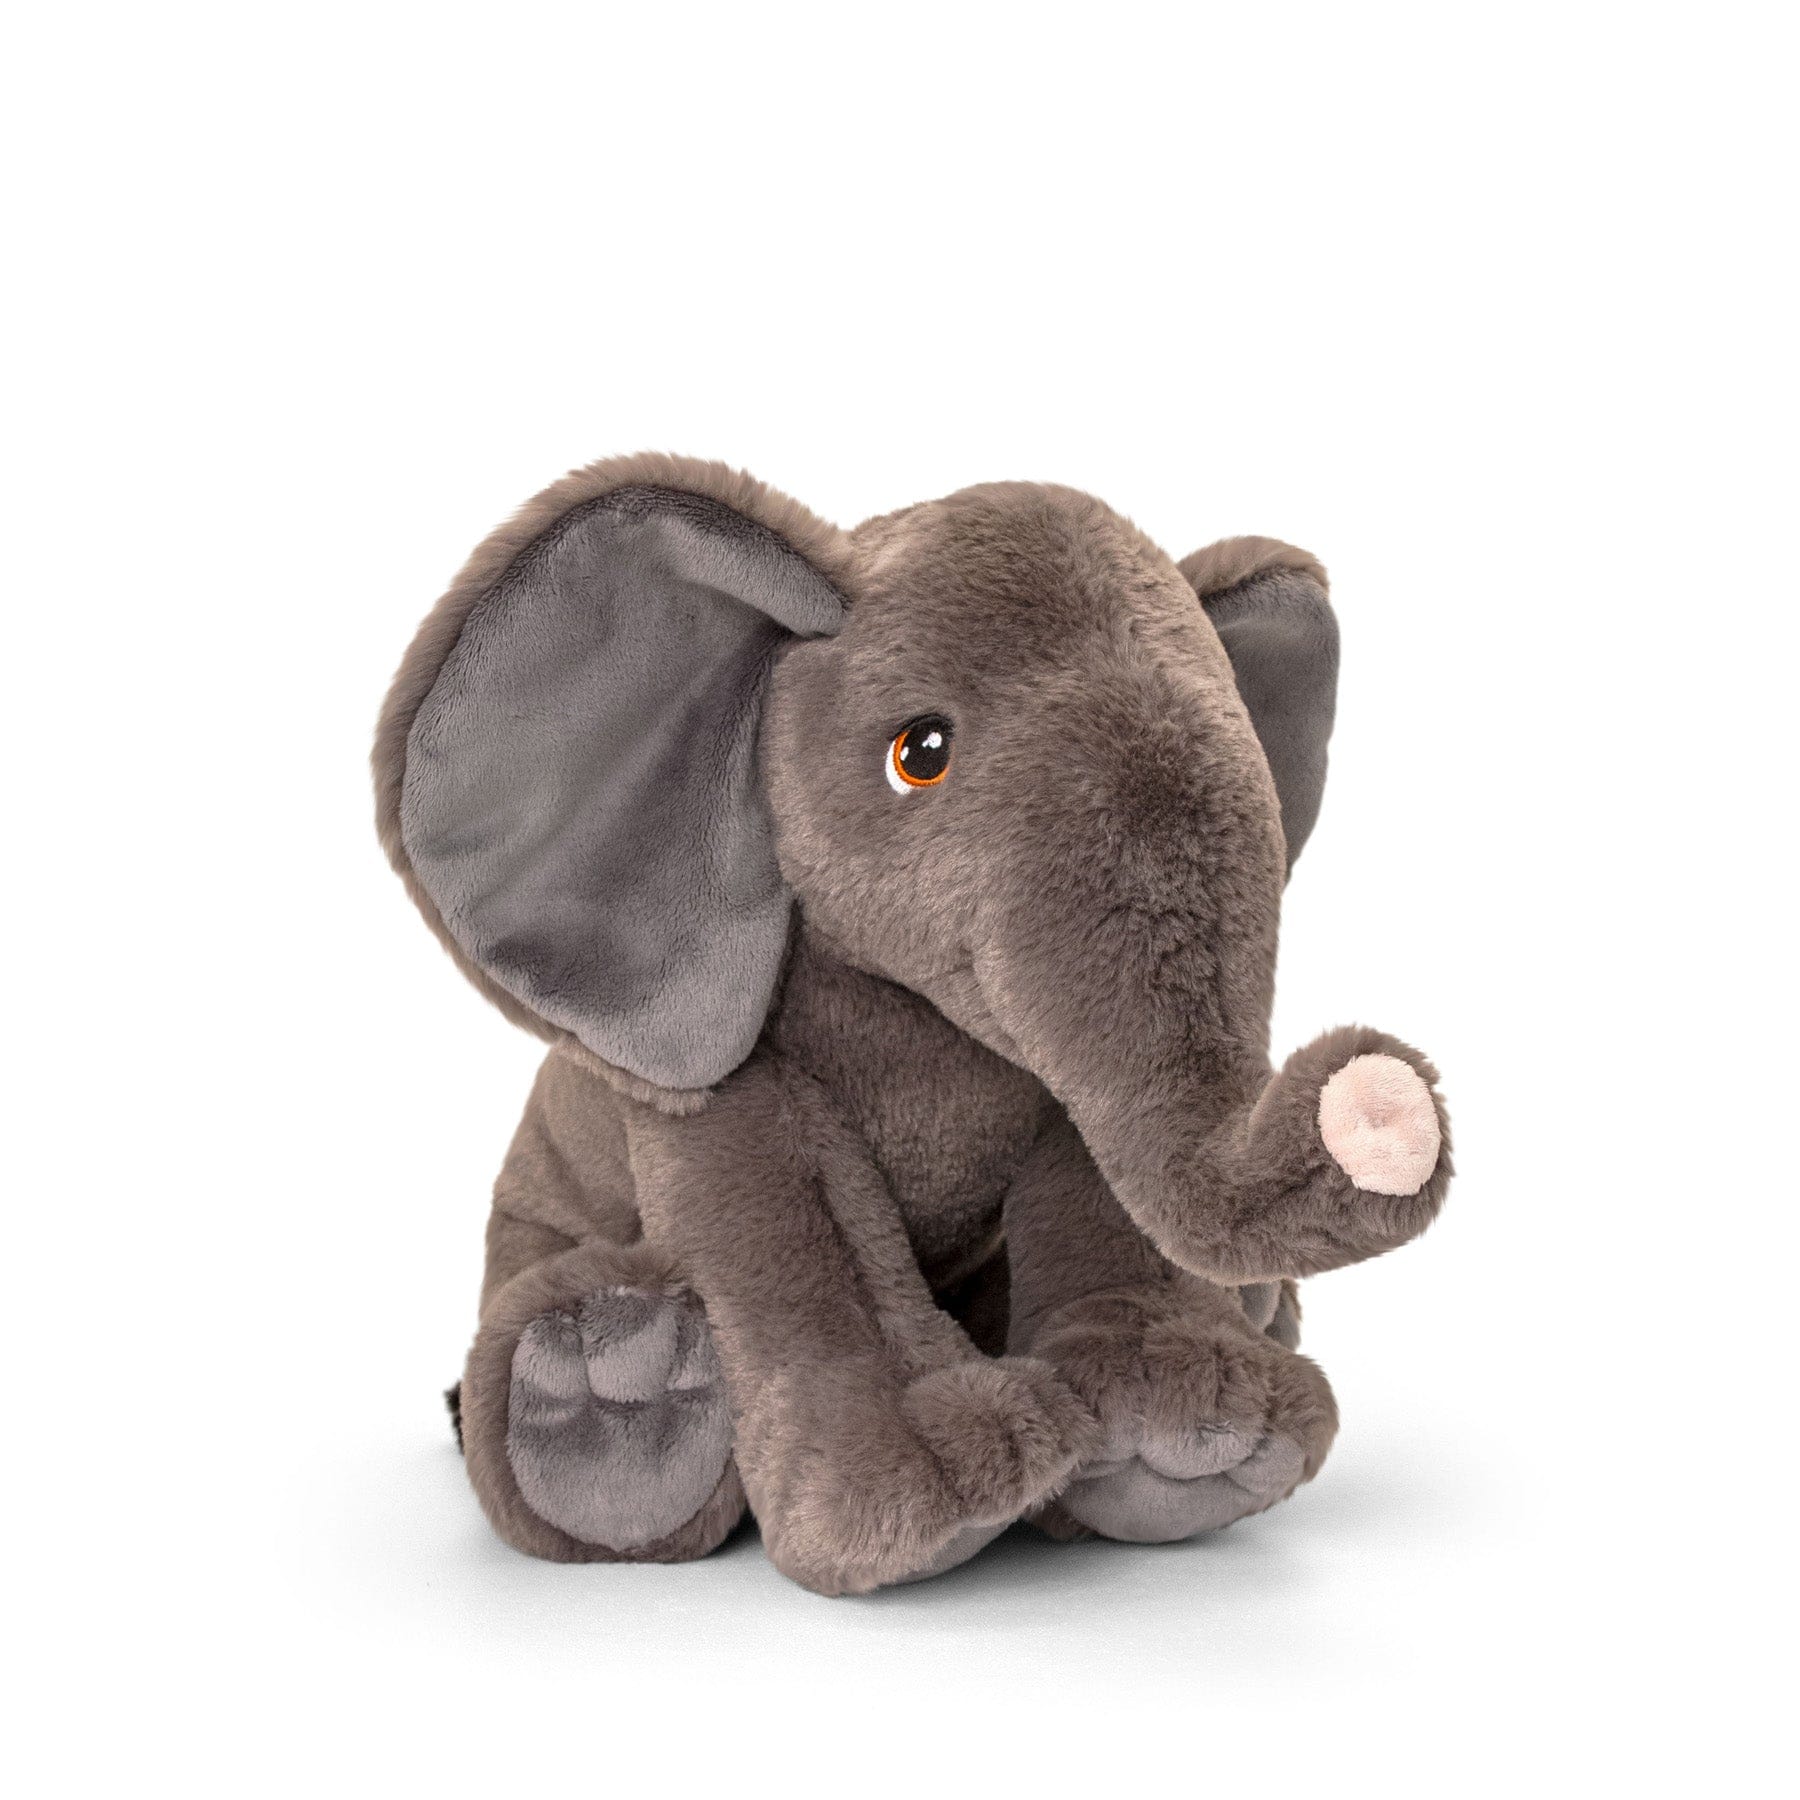 Plush elephant toy sitting isolated on white background, cute stuffed animal with large ears and realistic eyes, children's soft toy, grey elephant plushie